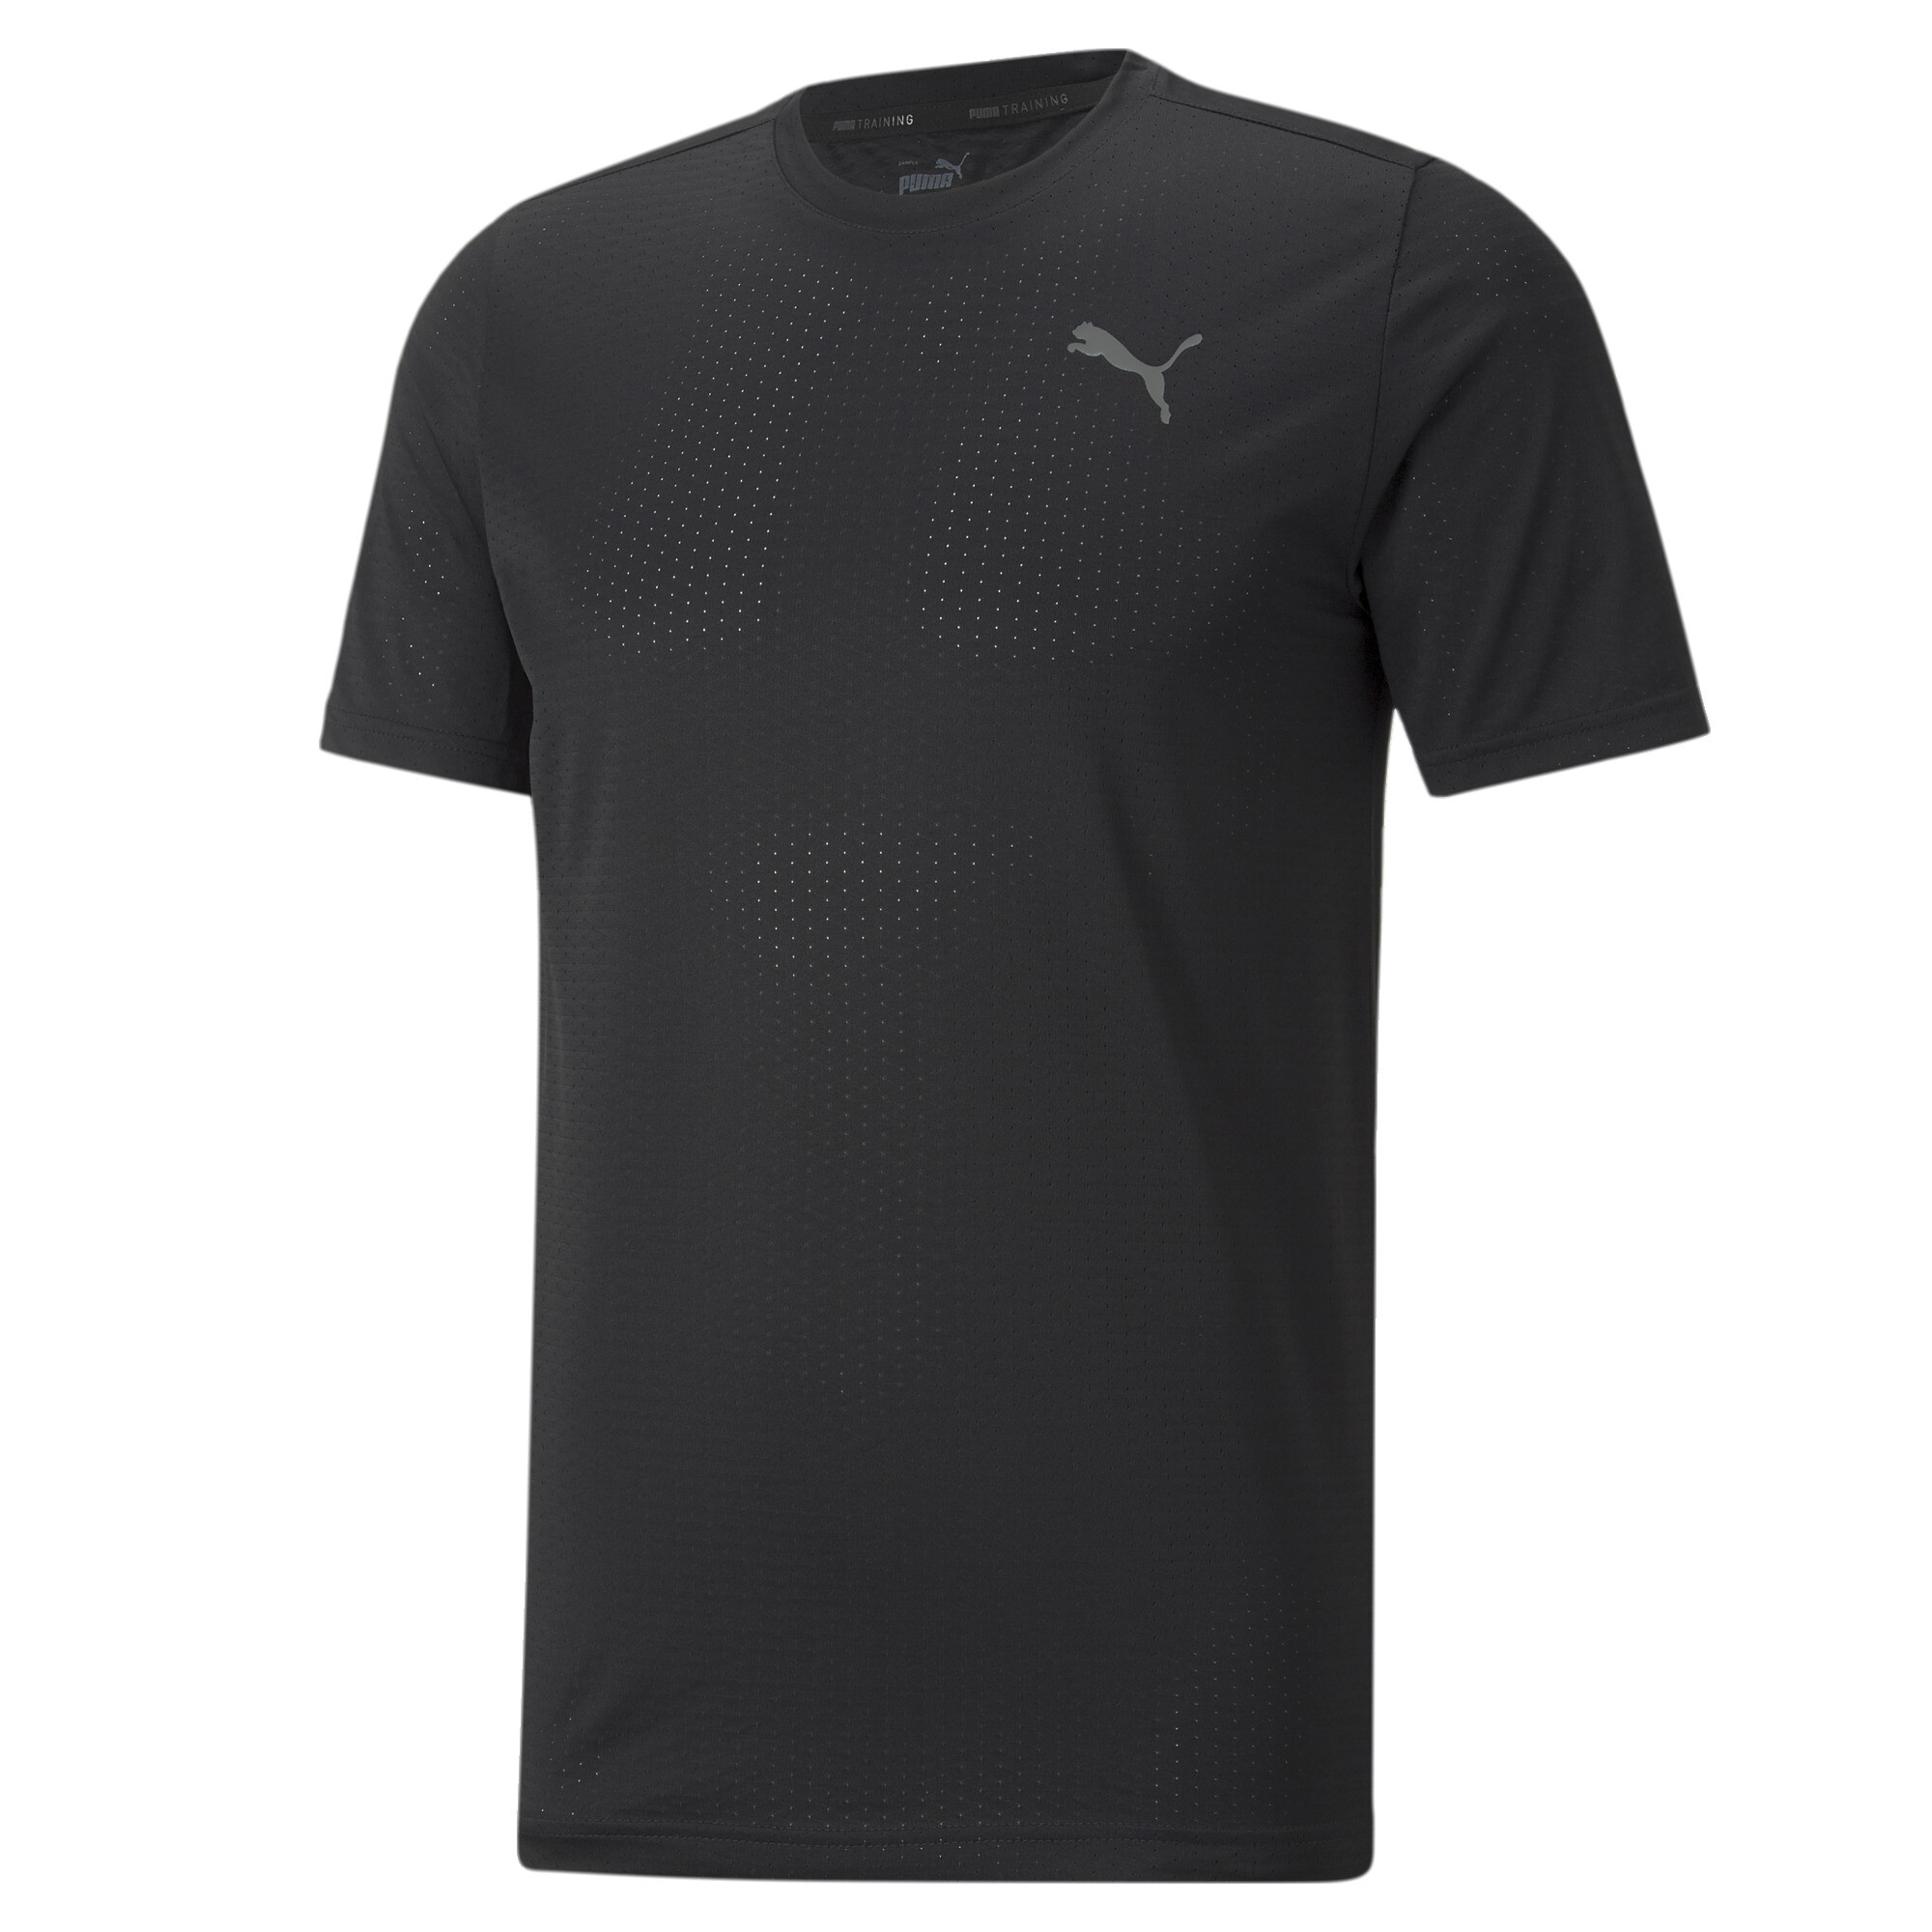 Men's Puma Favourite Blaster Training T-Shirt, Black, Size M, Clothing